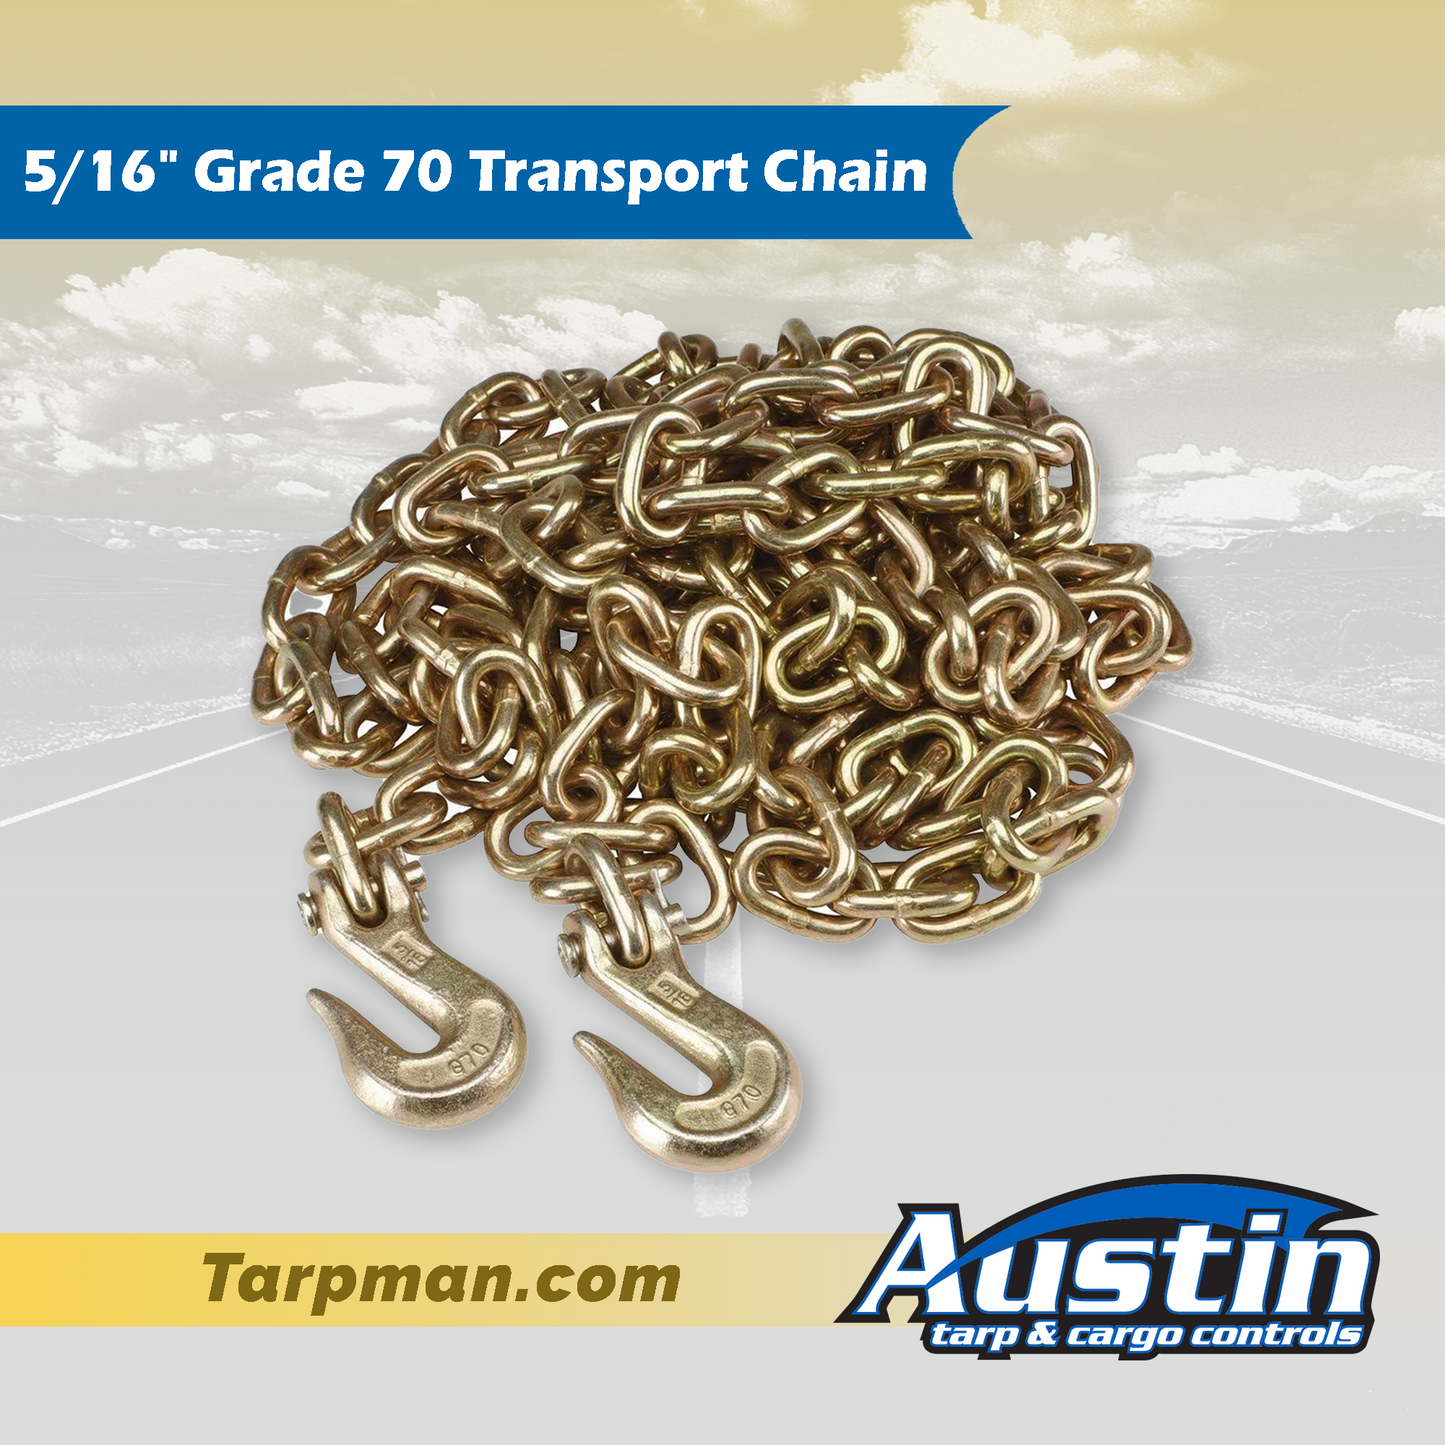 5/16" Grade 70 Transport Chain